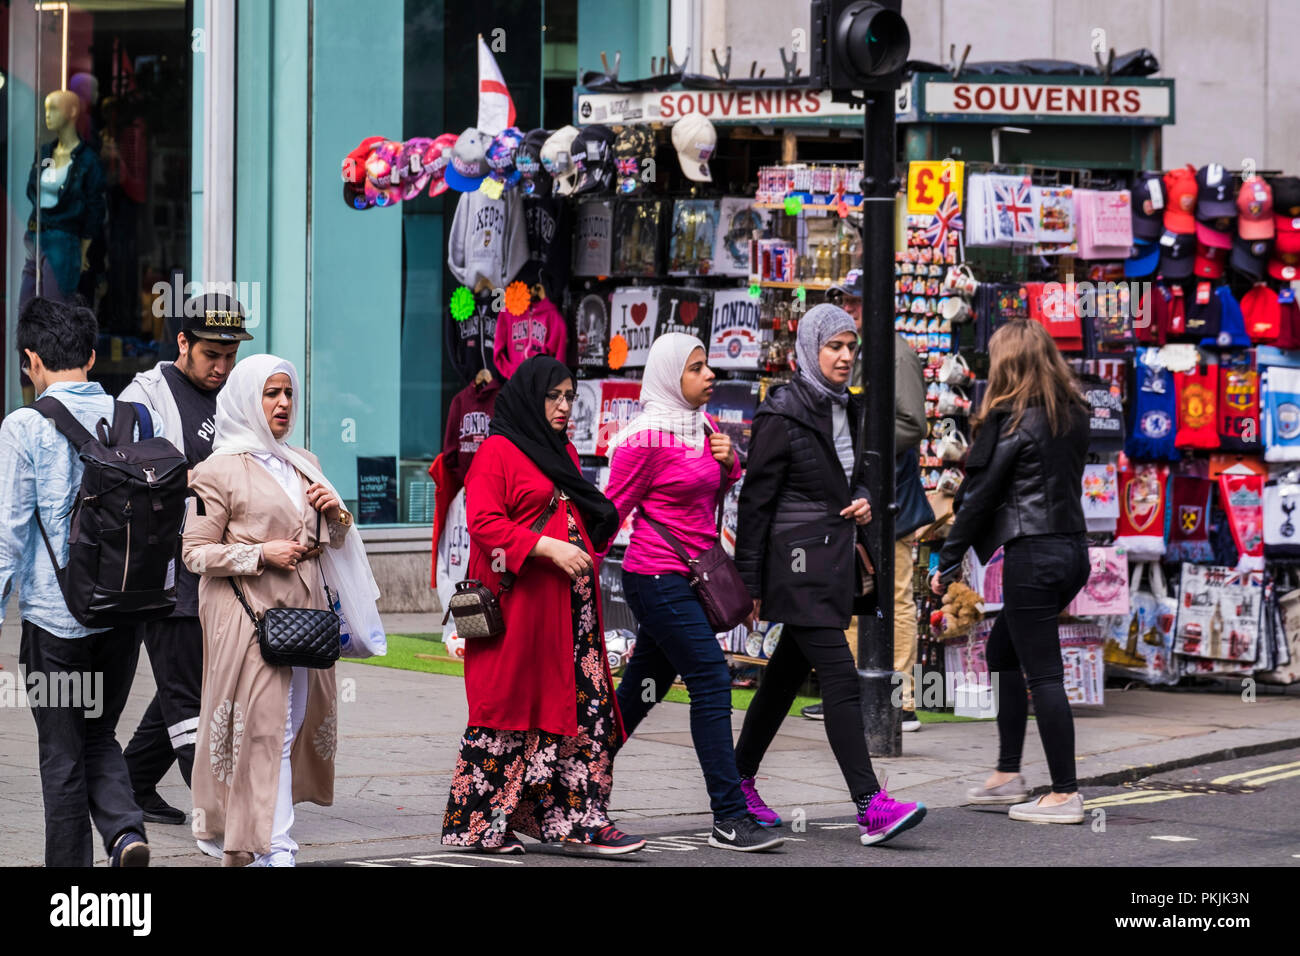 Muslim women shopping on Oxford Street, London, England, U.K. Stock Photo